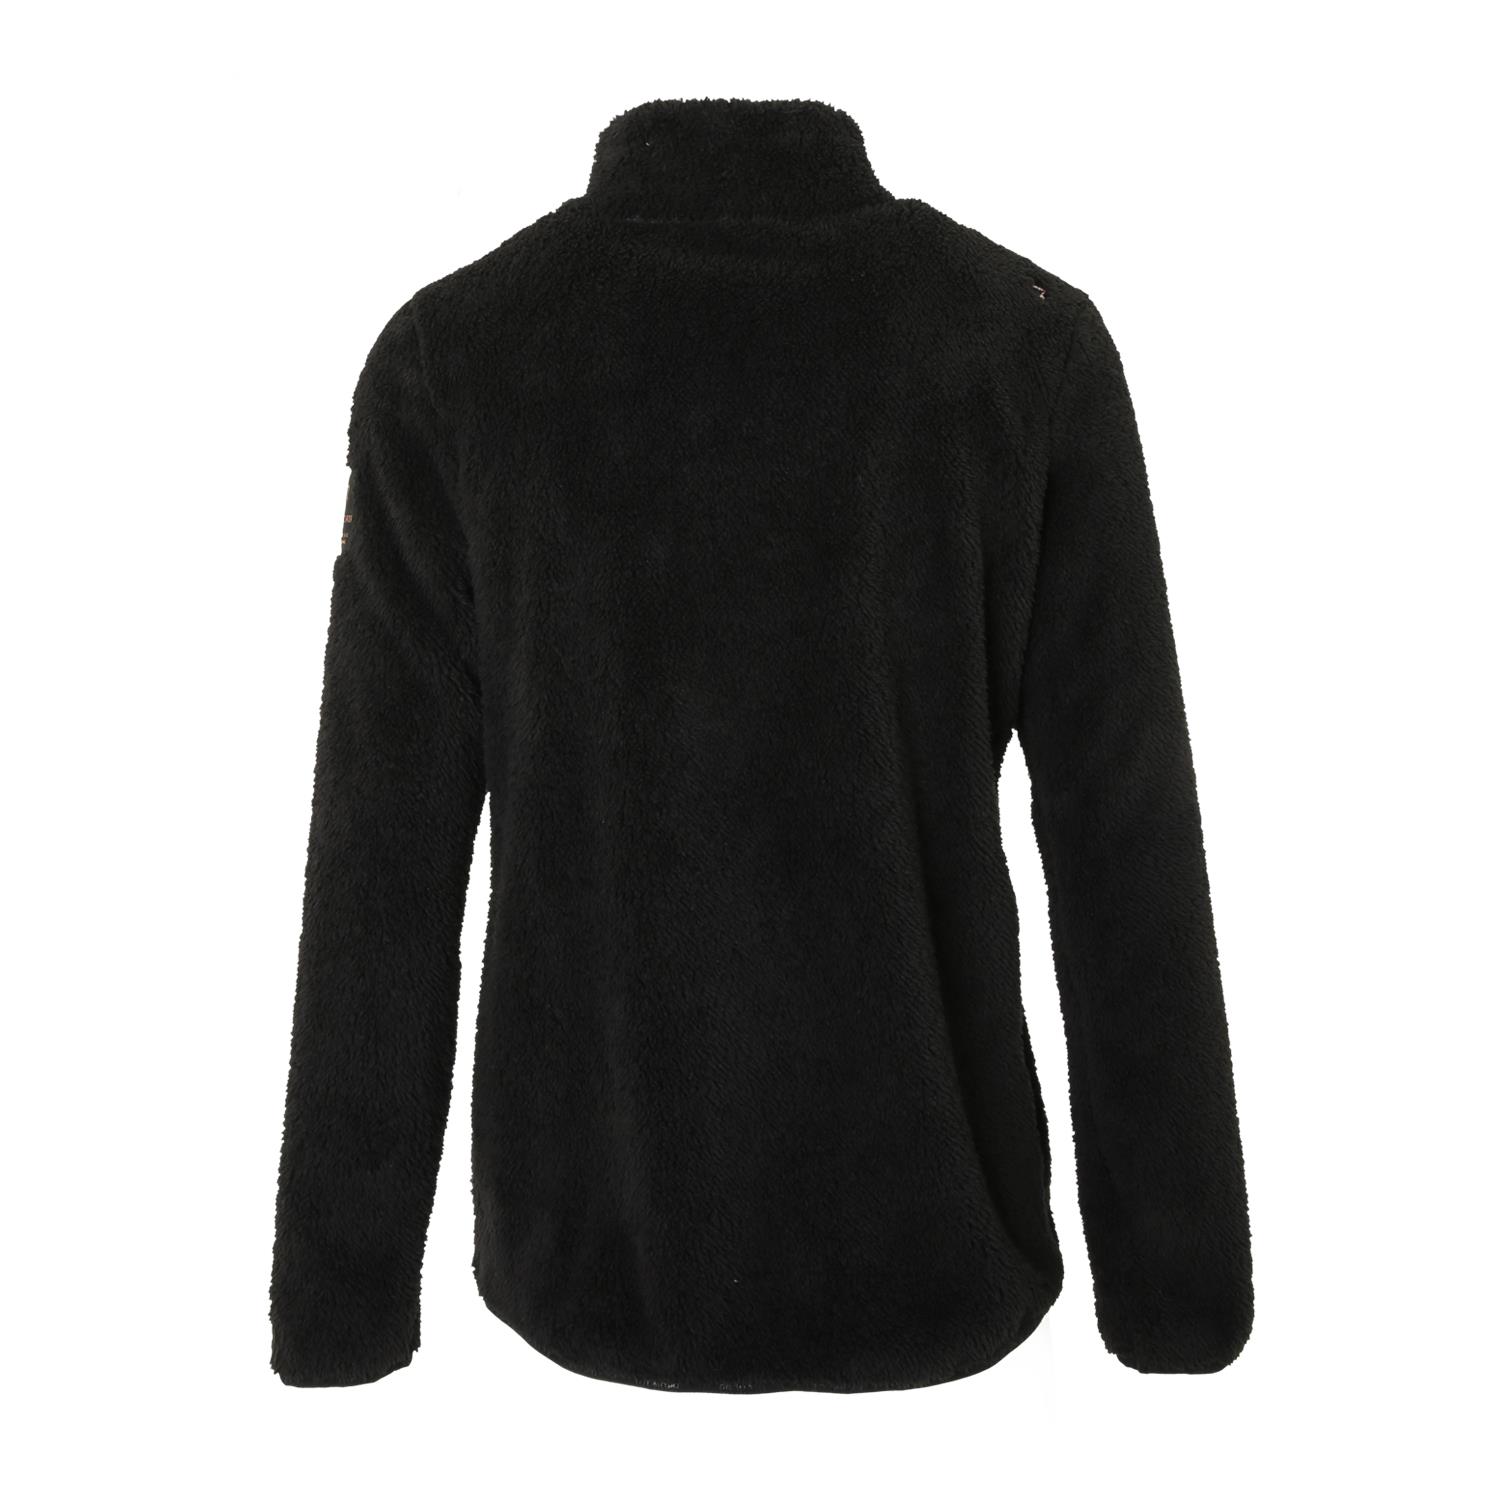 Brunotti Fleece Jacket Piculet Woman Fleece Black Breathable Warming | eBay